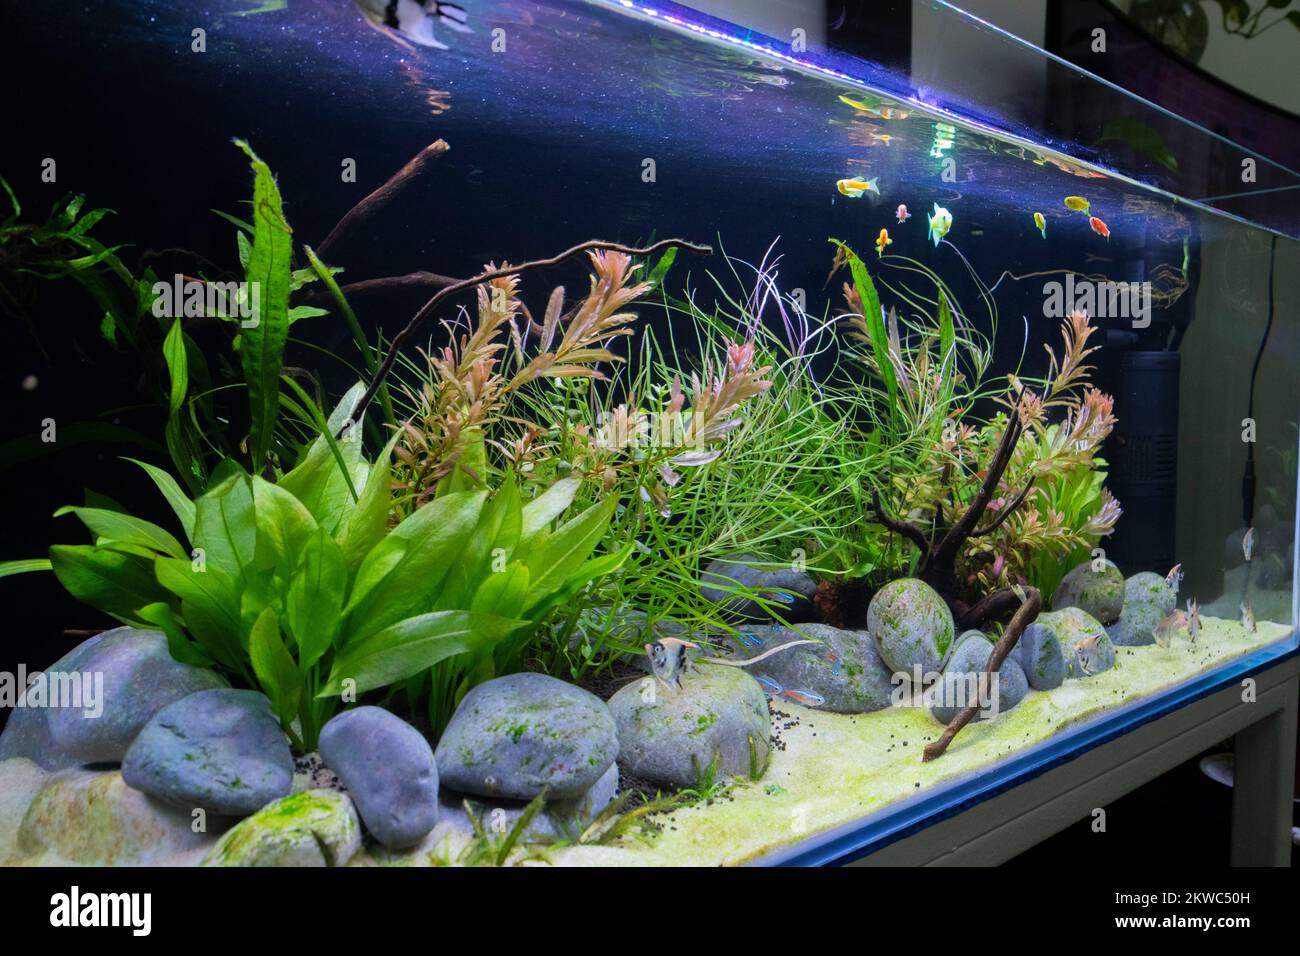 Aquarium fish home room hi-res stock photography and images - Alamy